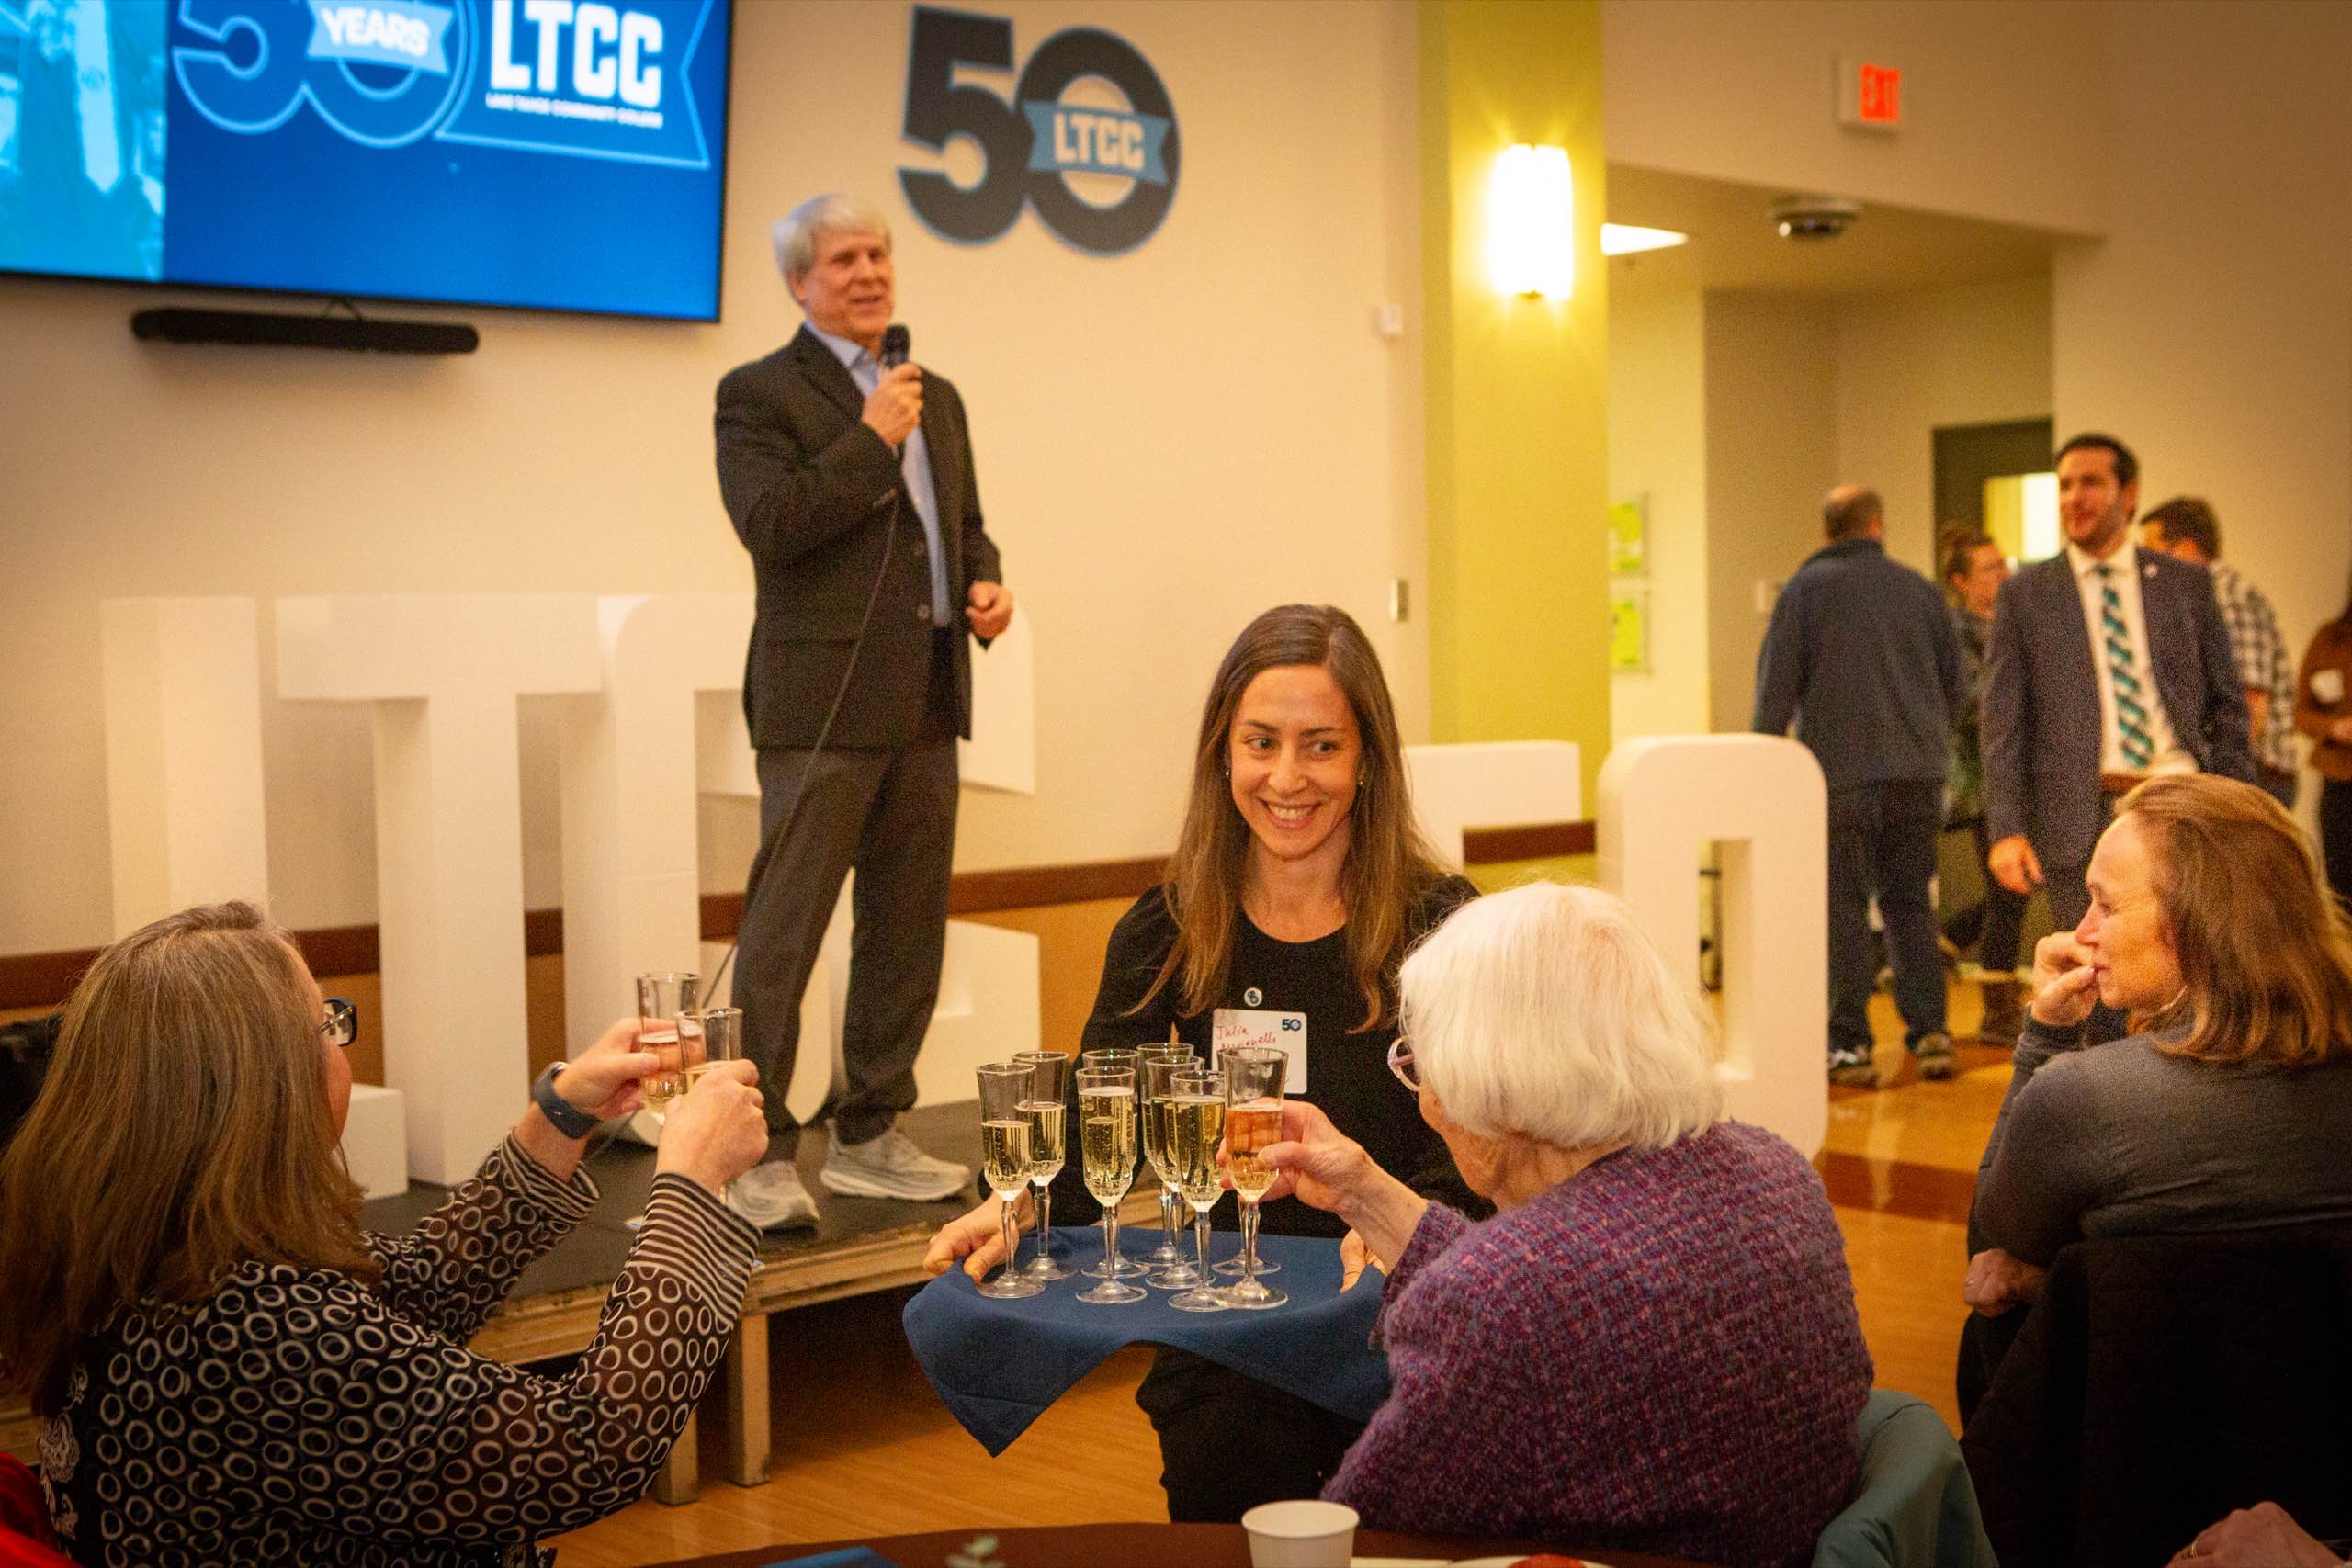 50 years of LTCC: It Takes A Village